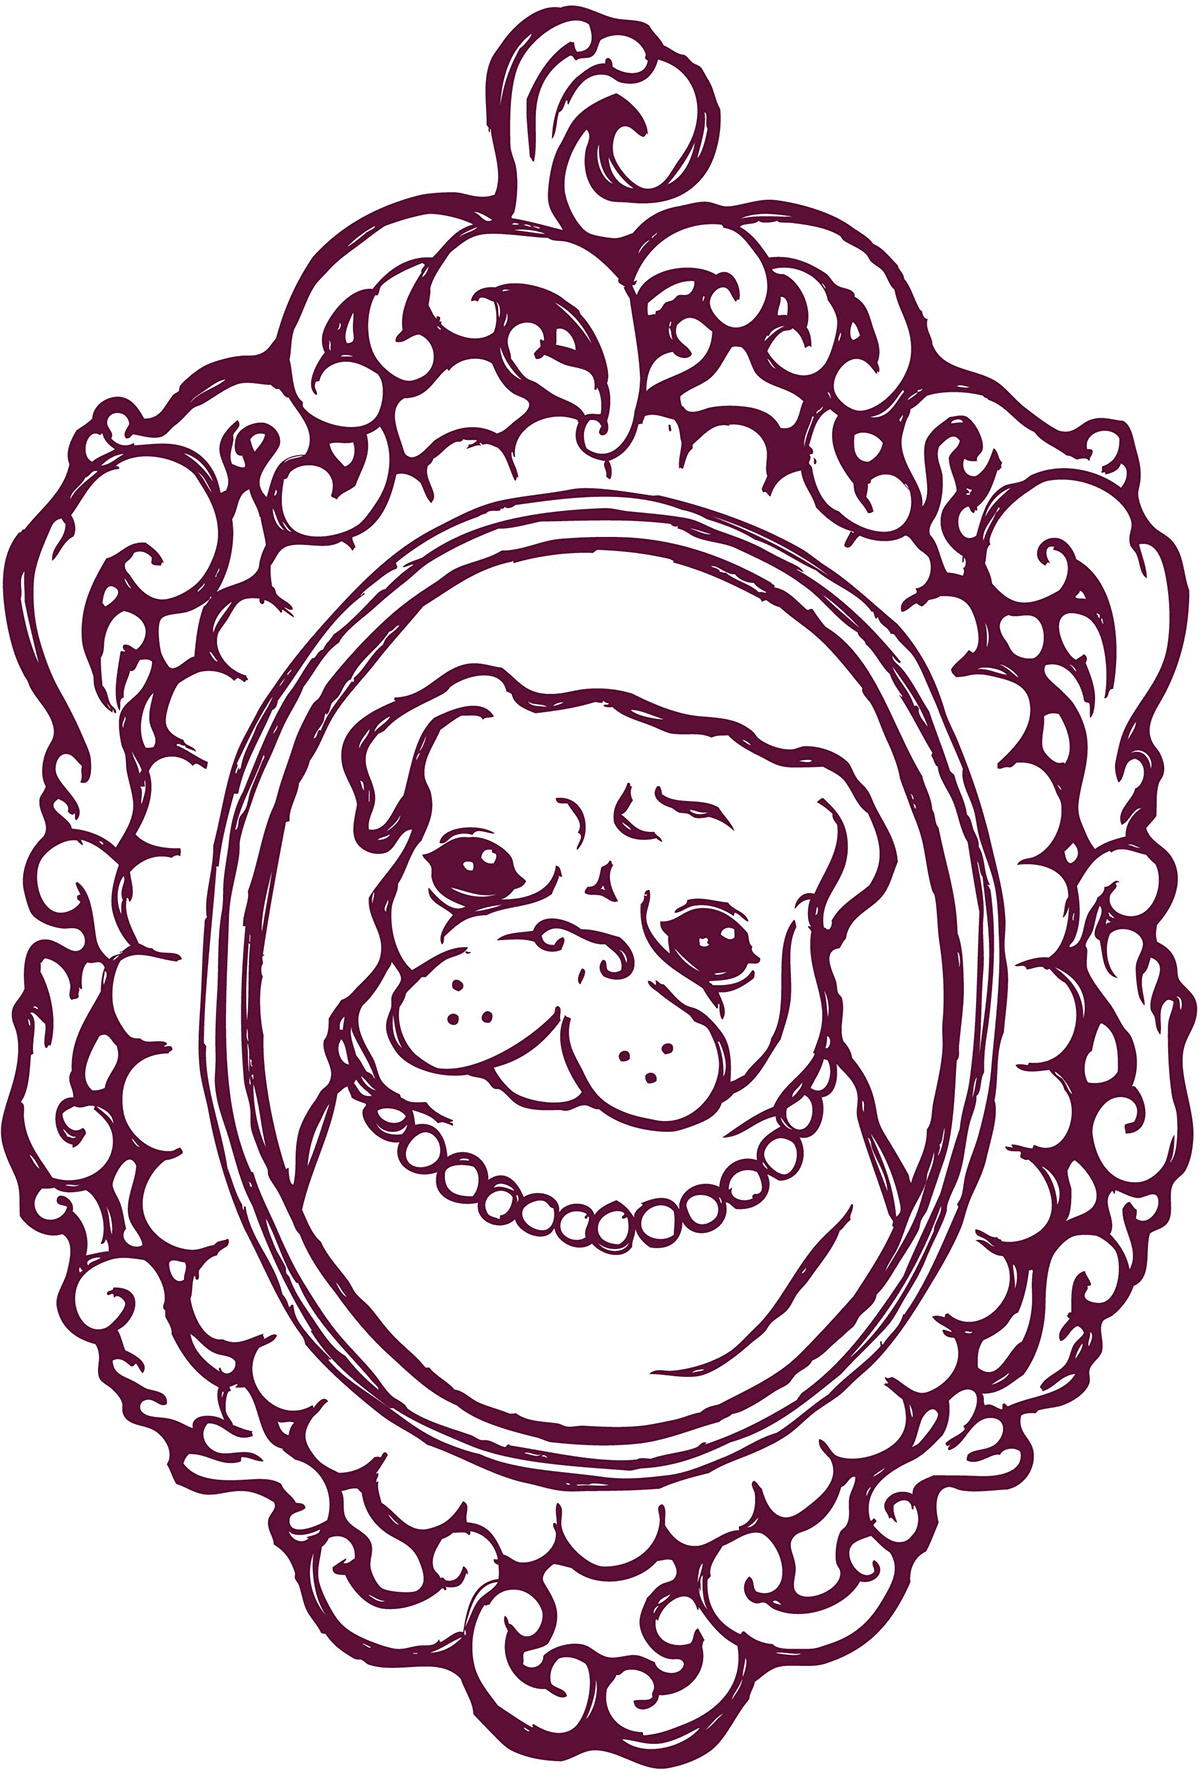 Pug  Princess   victorian frame  frame  dog  puppy  Cute Milwaukee  wisconsin t-shirt  apparel graphics  fashion  MIAD hand drawn